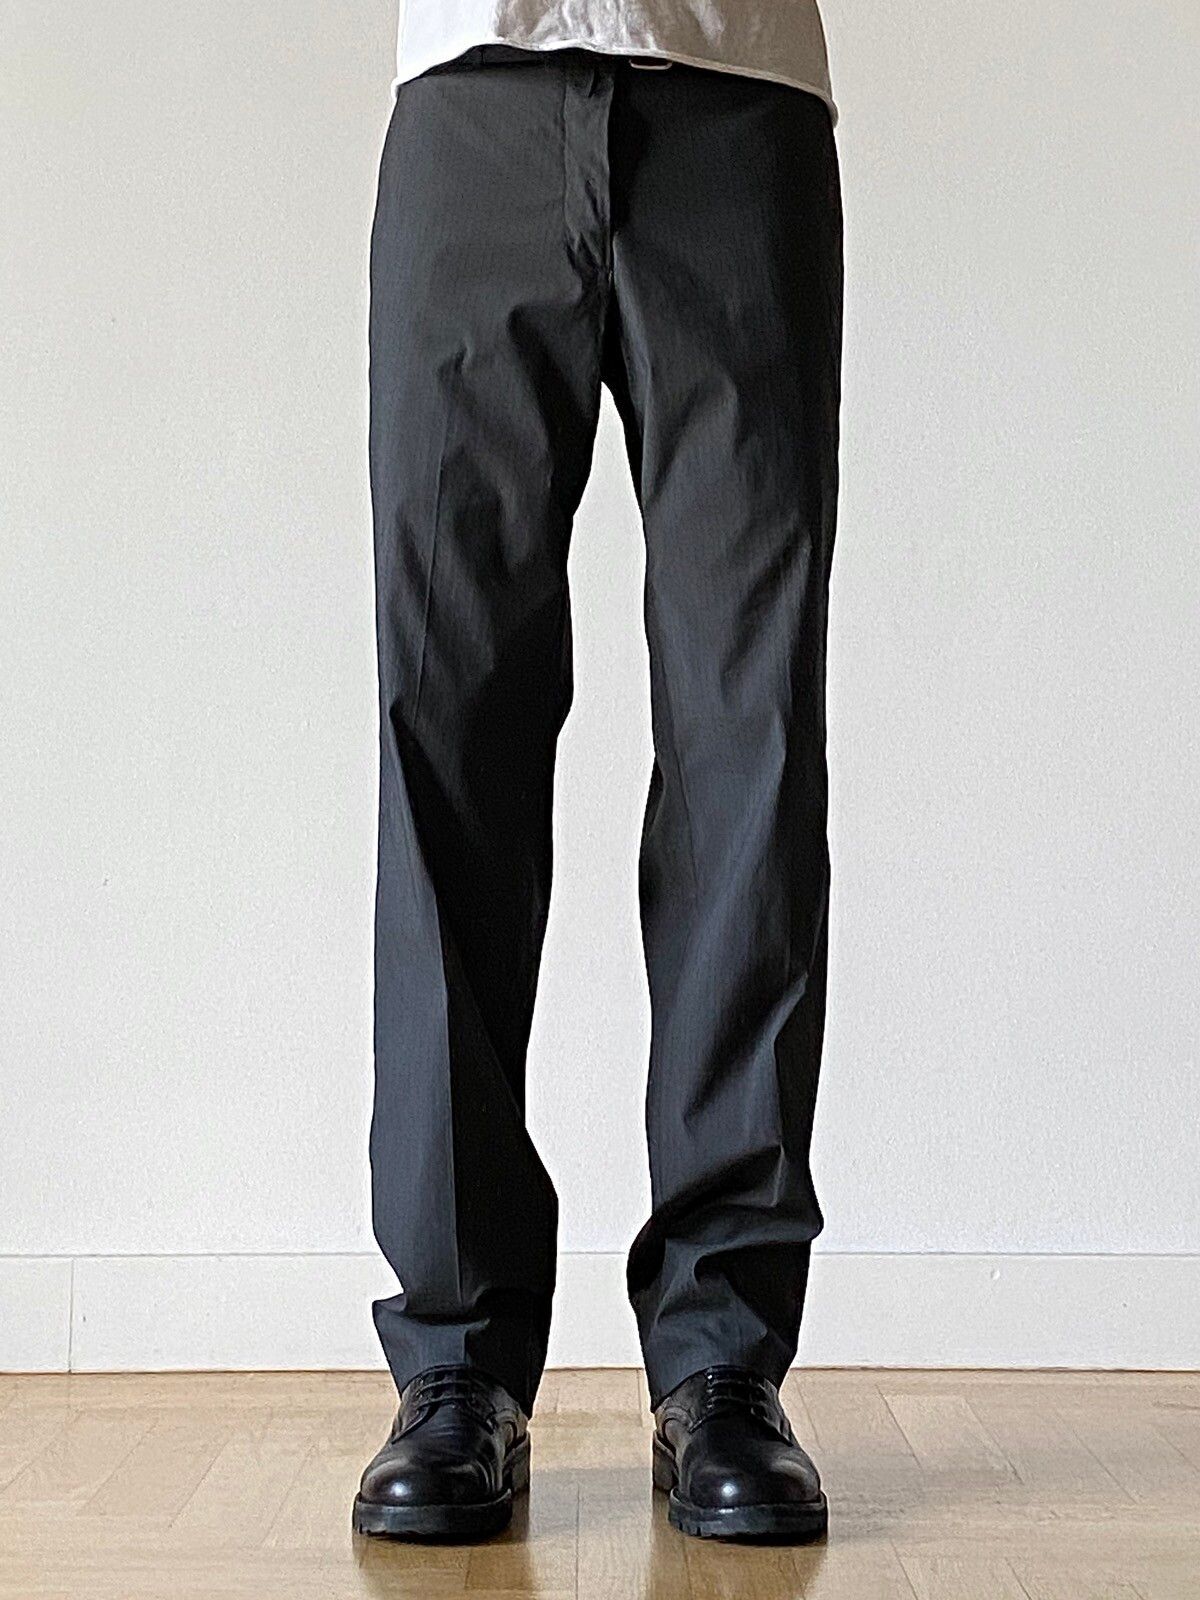 Raf Simons Jil Sander by Raf Simons Cotton Suit Pants | Grailed